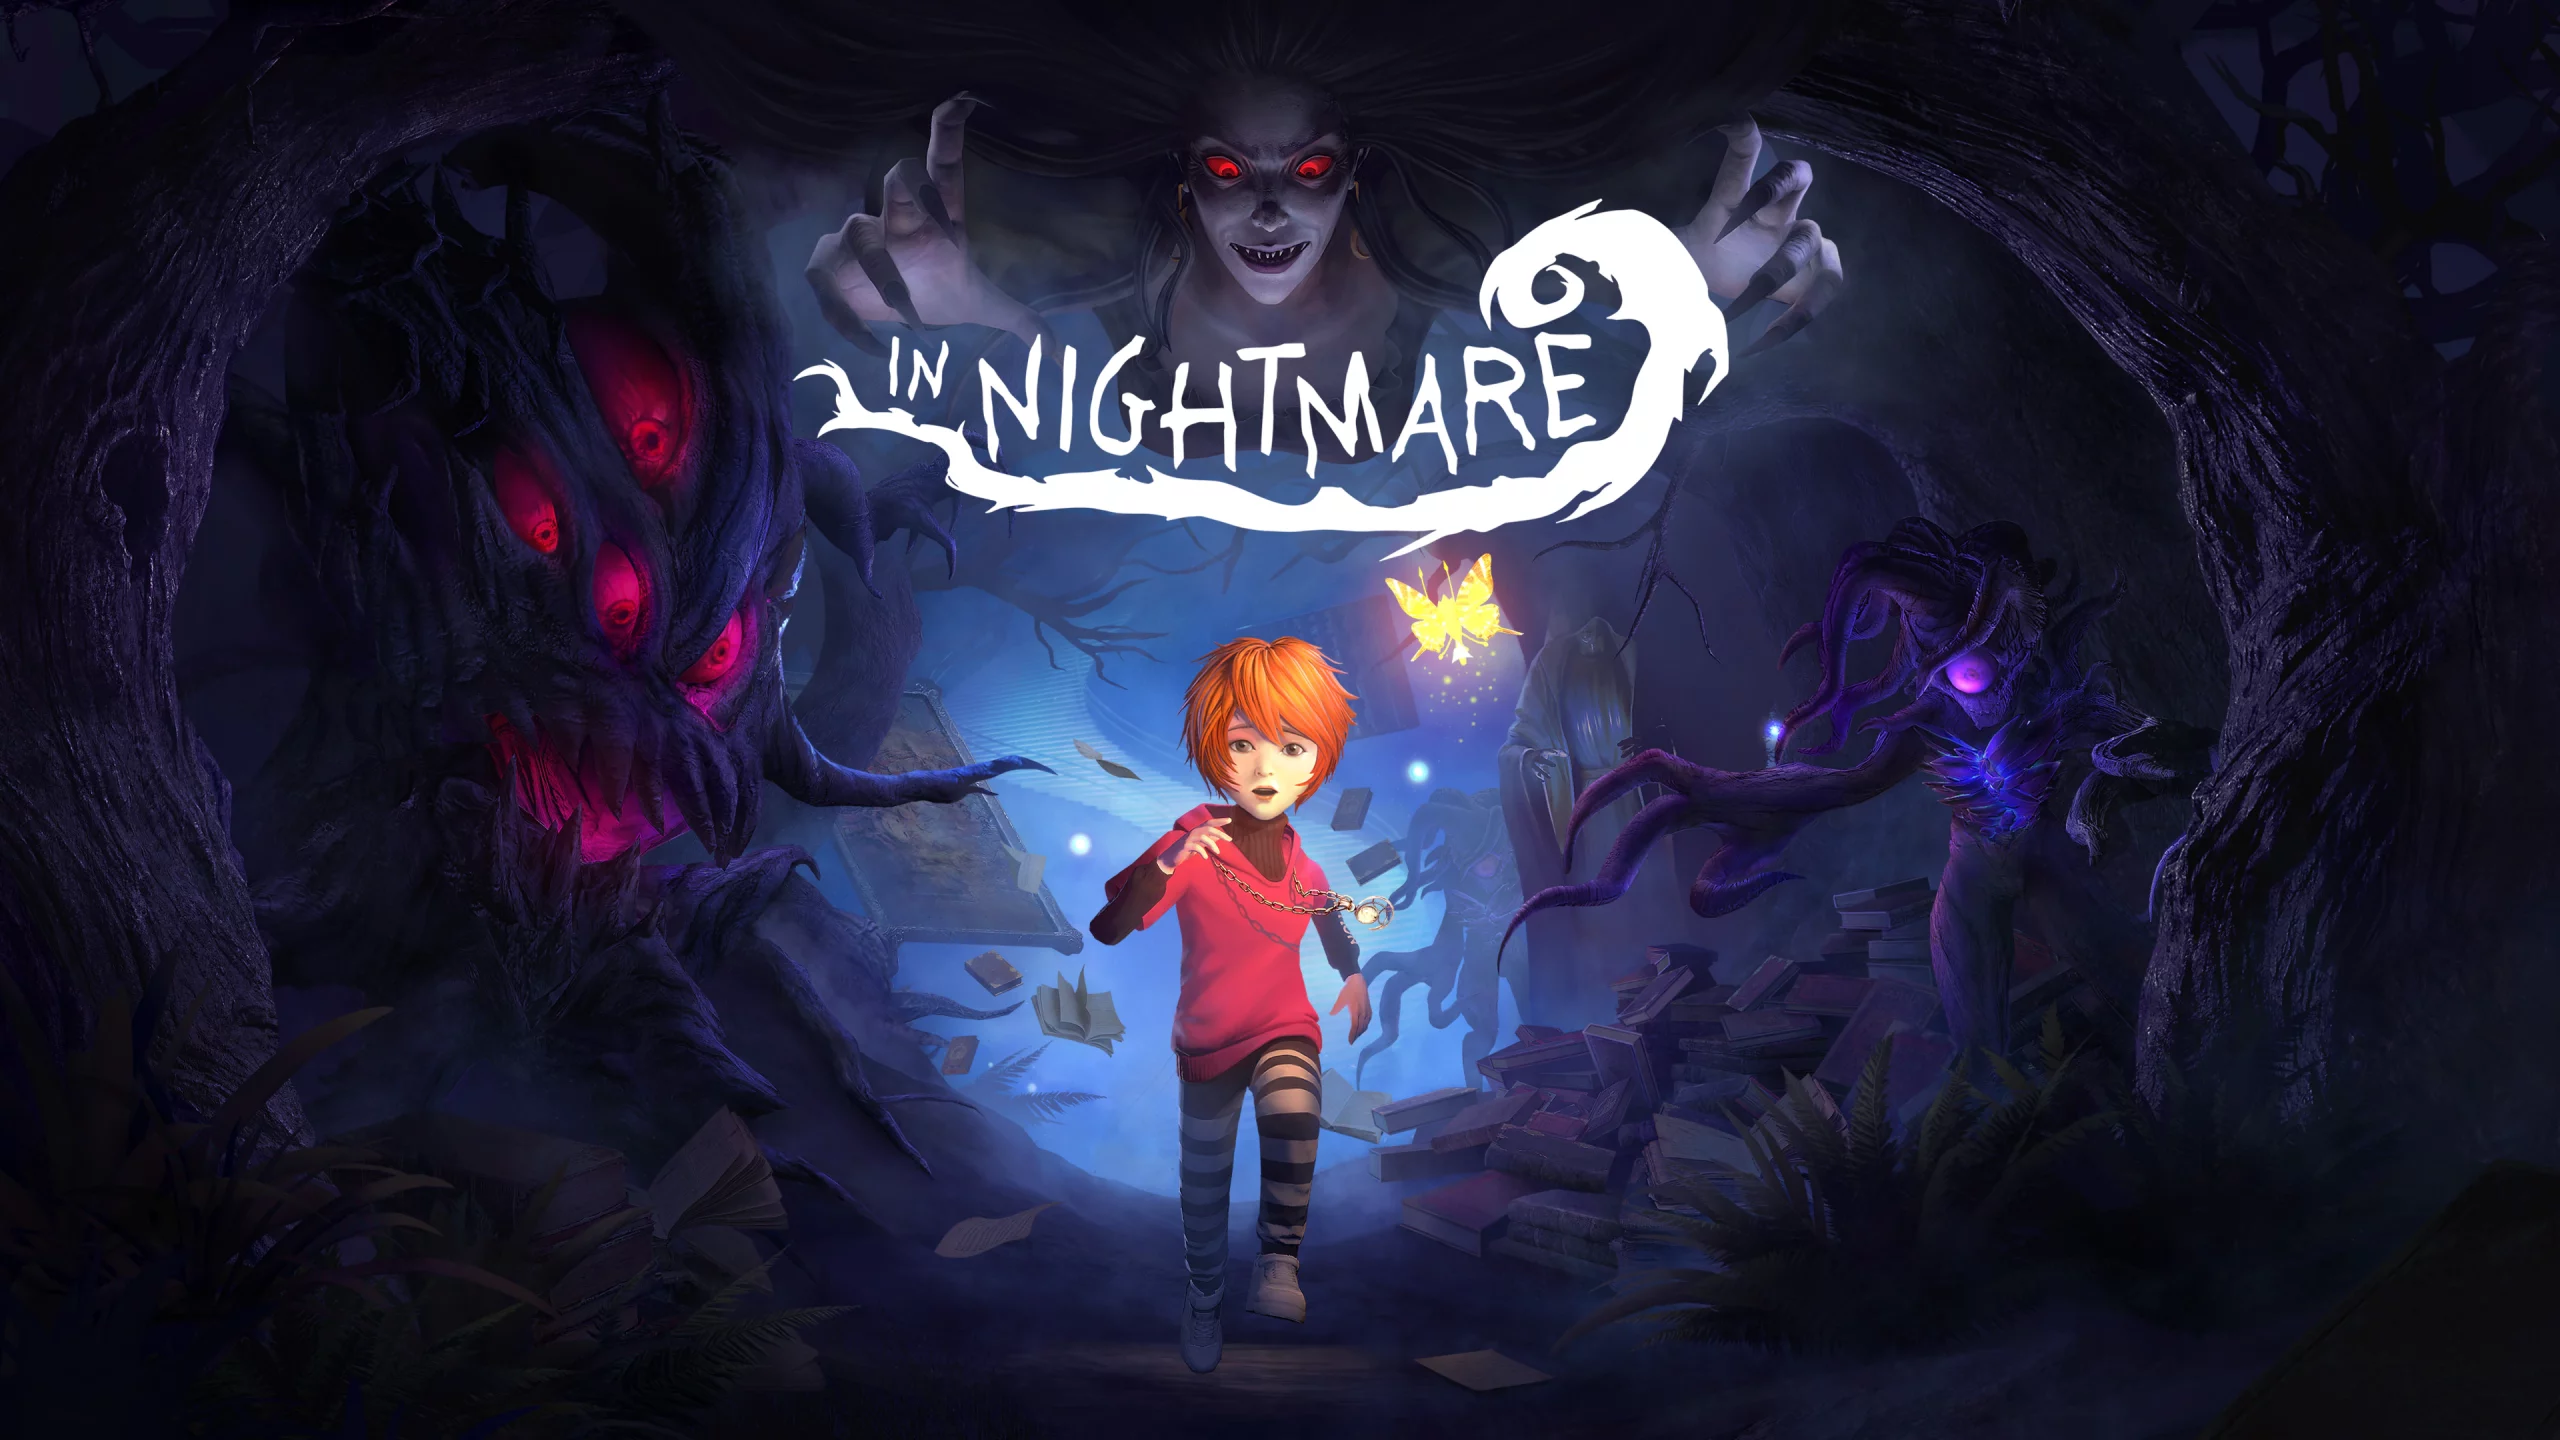 In Nightmare – Garoto fica preso em pesadelo onde enfrenta monstros assustadores